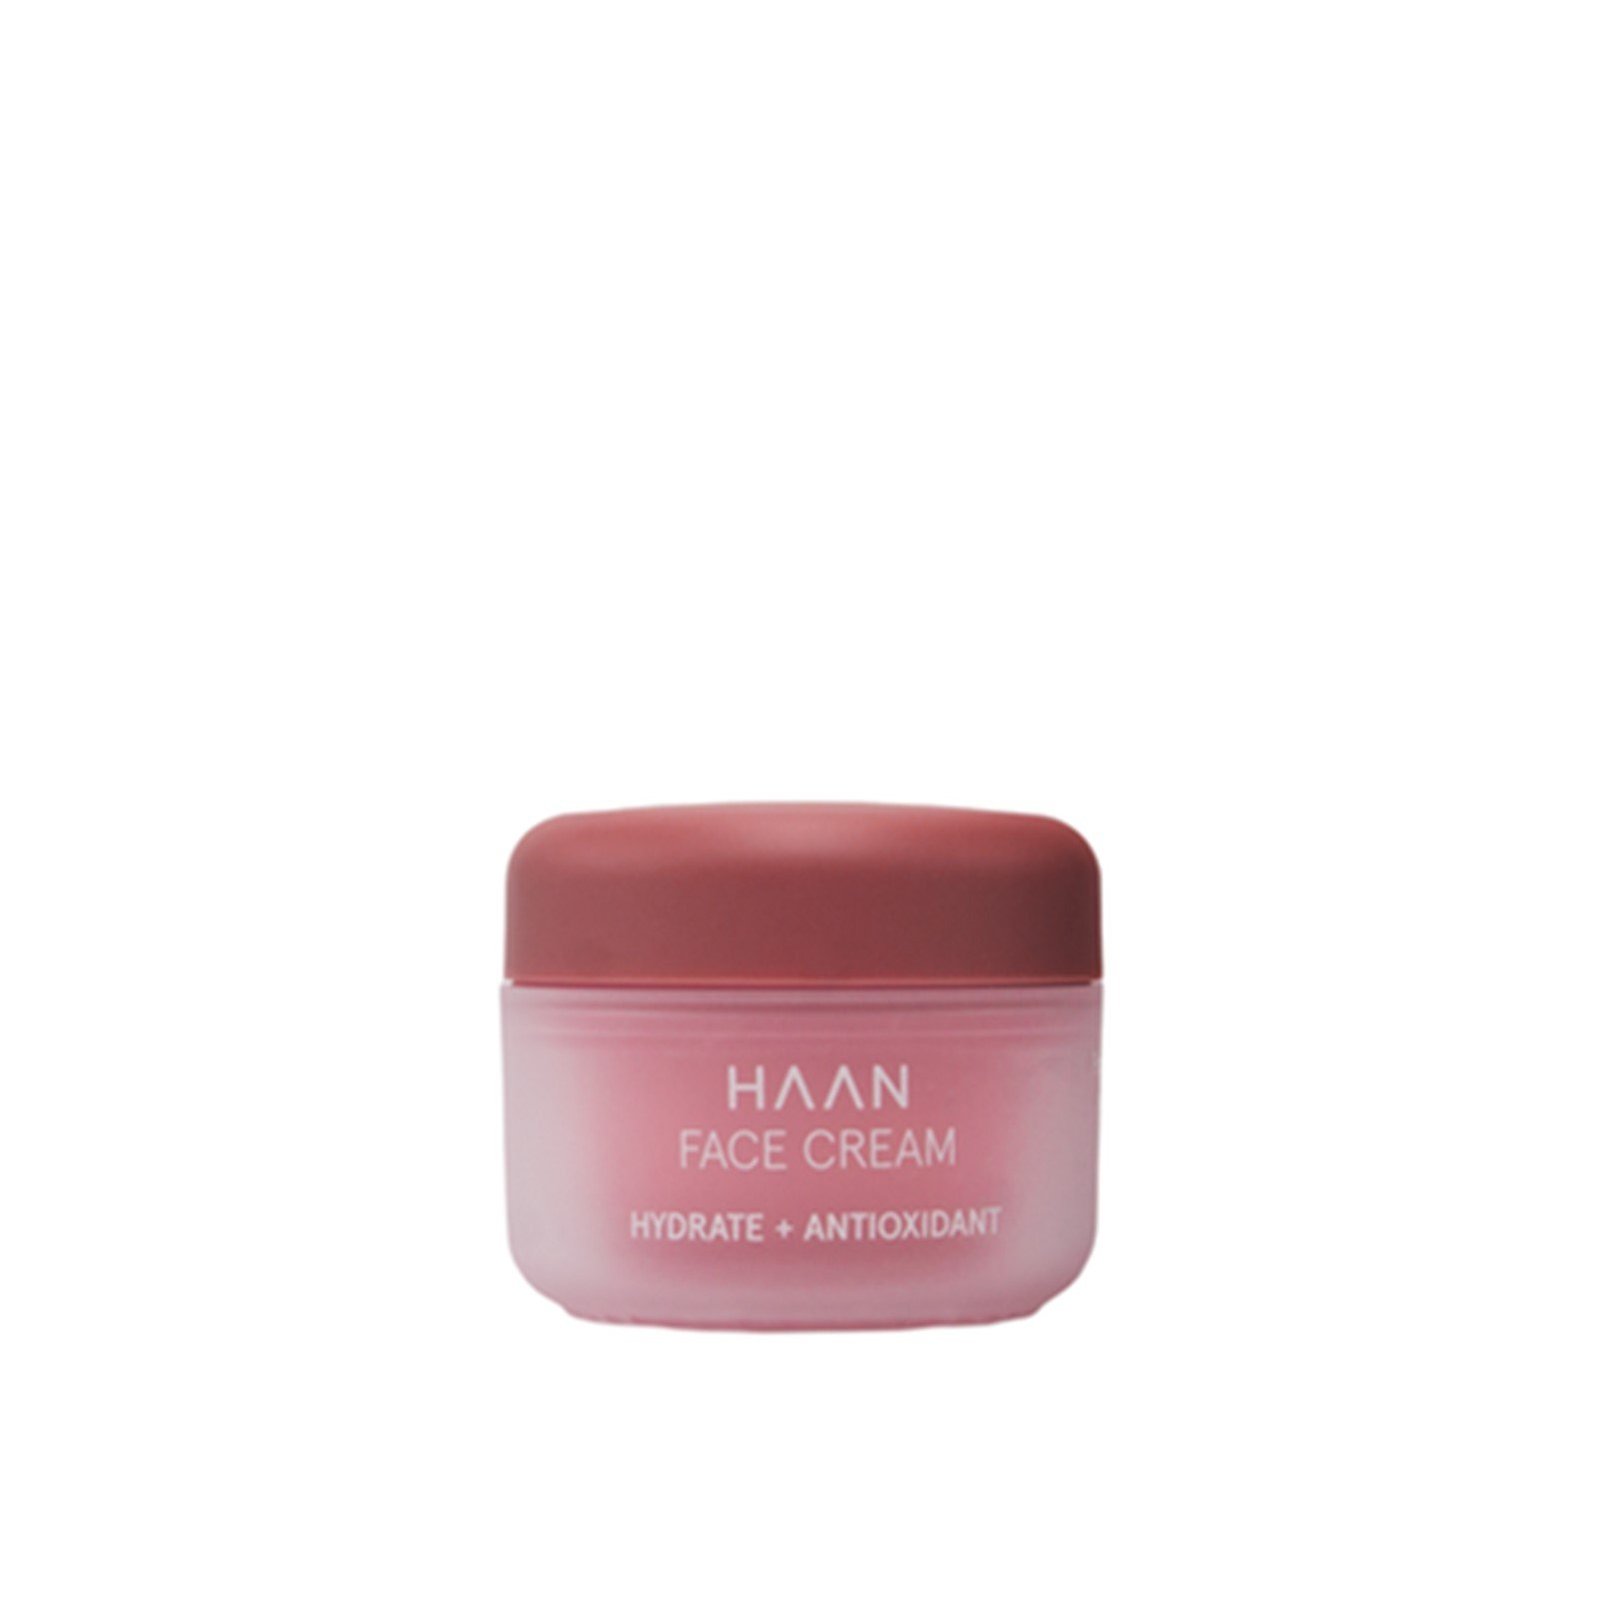 HAAN Peptide Antioxidant Face Cream 50ml (1.69 fl oz)